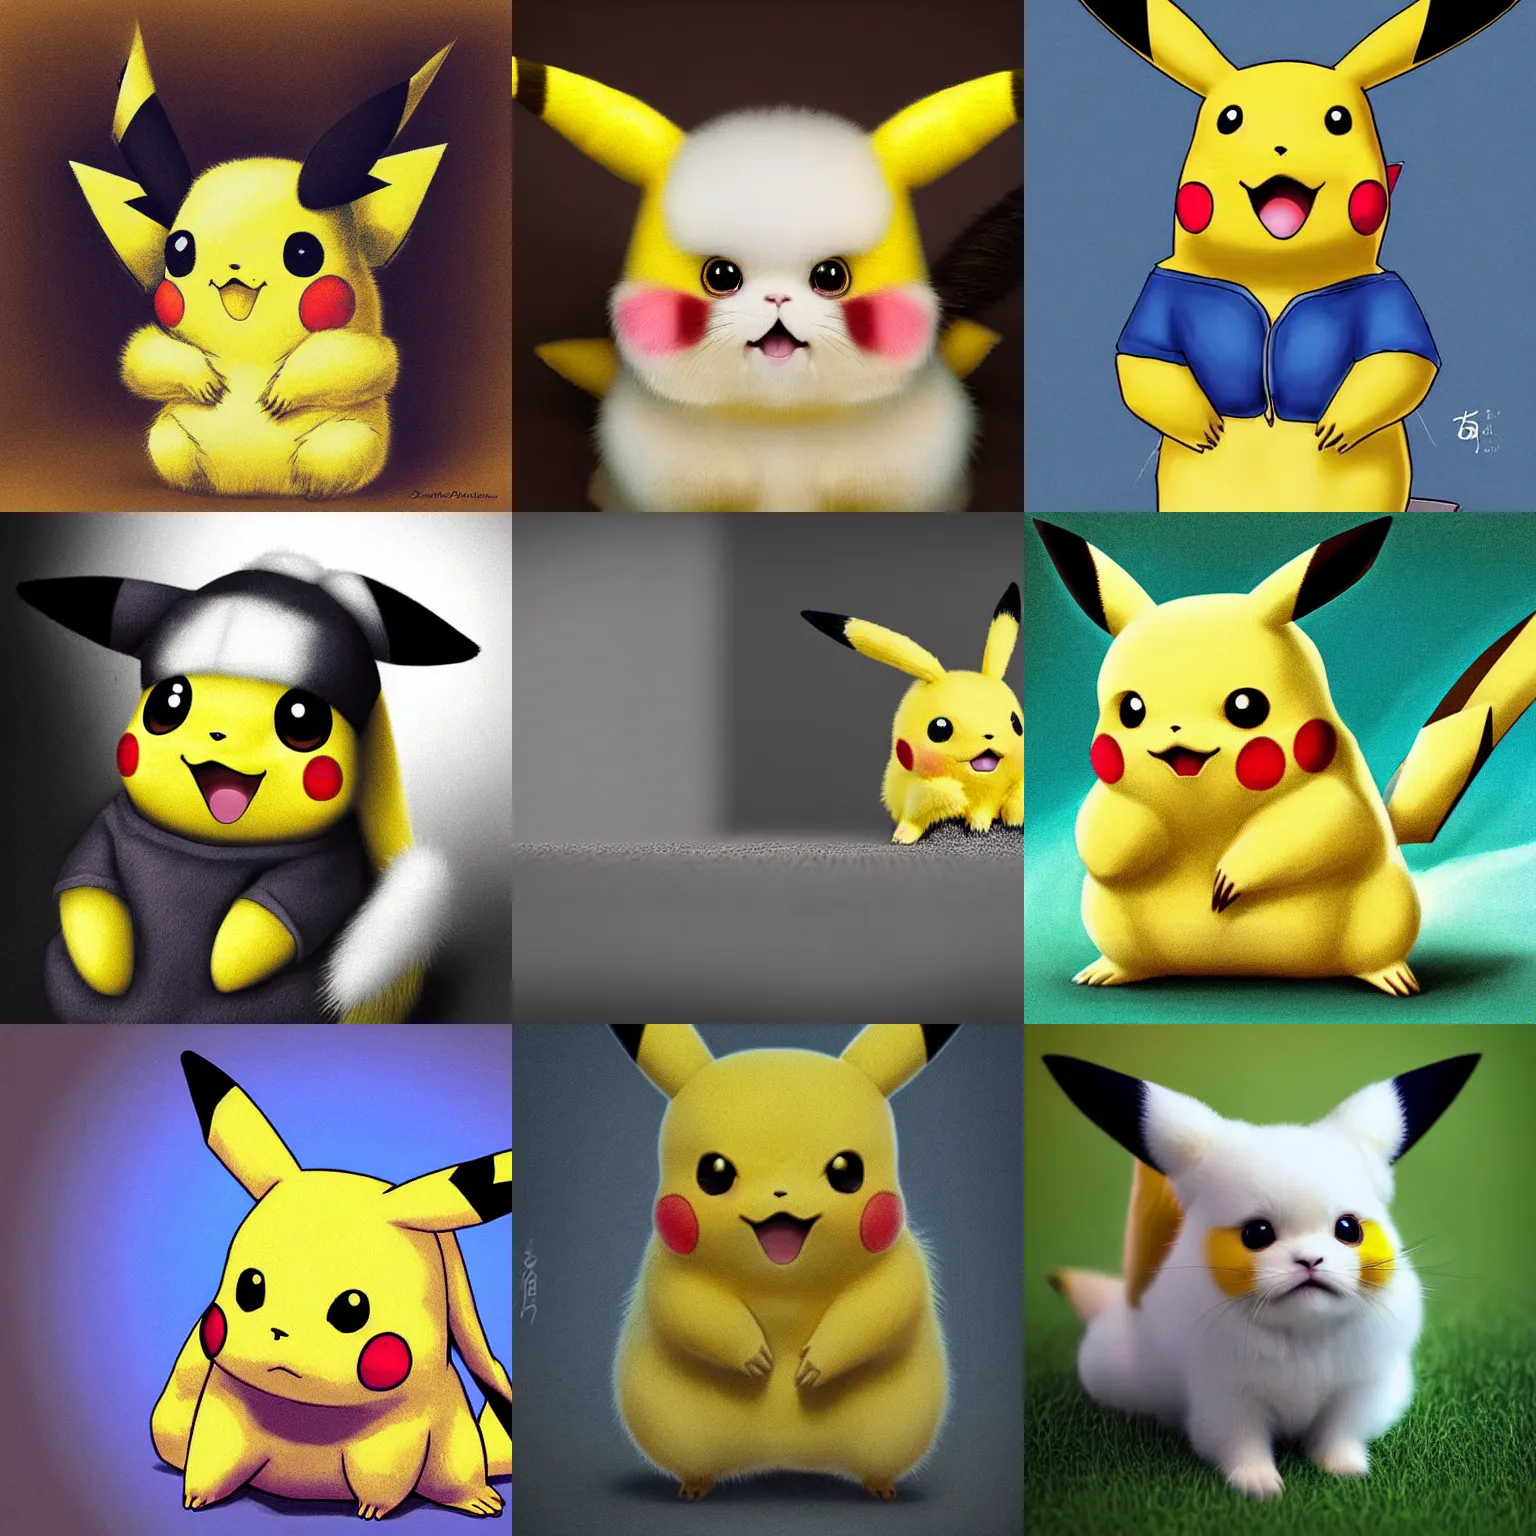 Prompt: a beautiful portrait of pikachu, photograph, realistic, cute, fluffy, kawaii